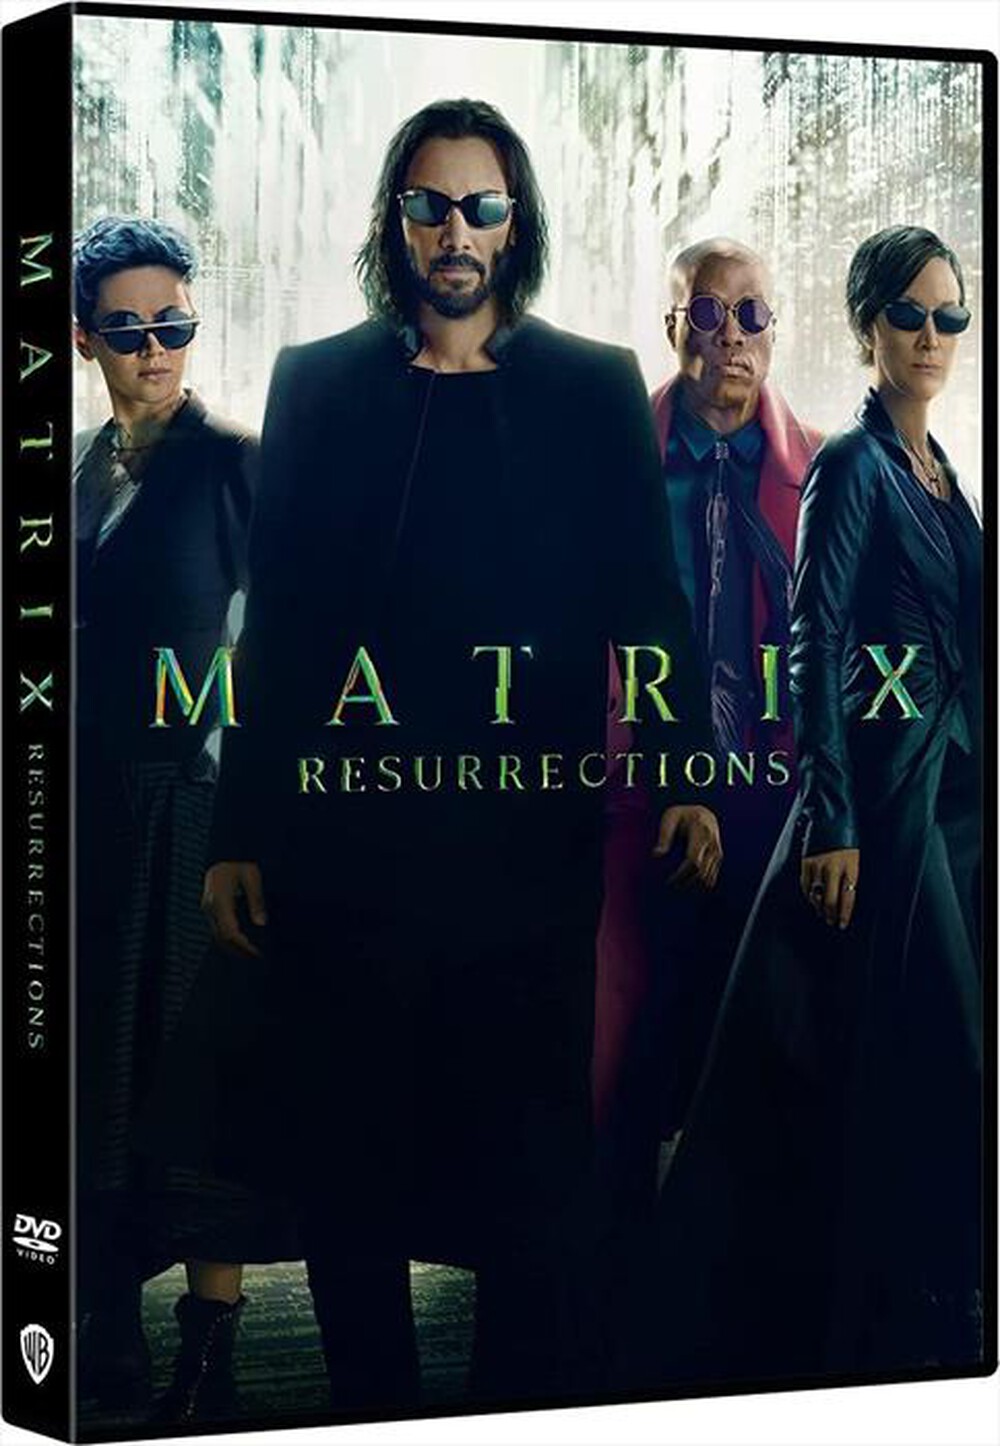 "WARNER HOME VIDEO - Matrix Resurrections"